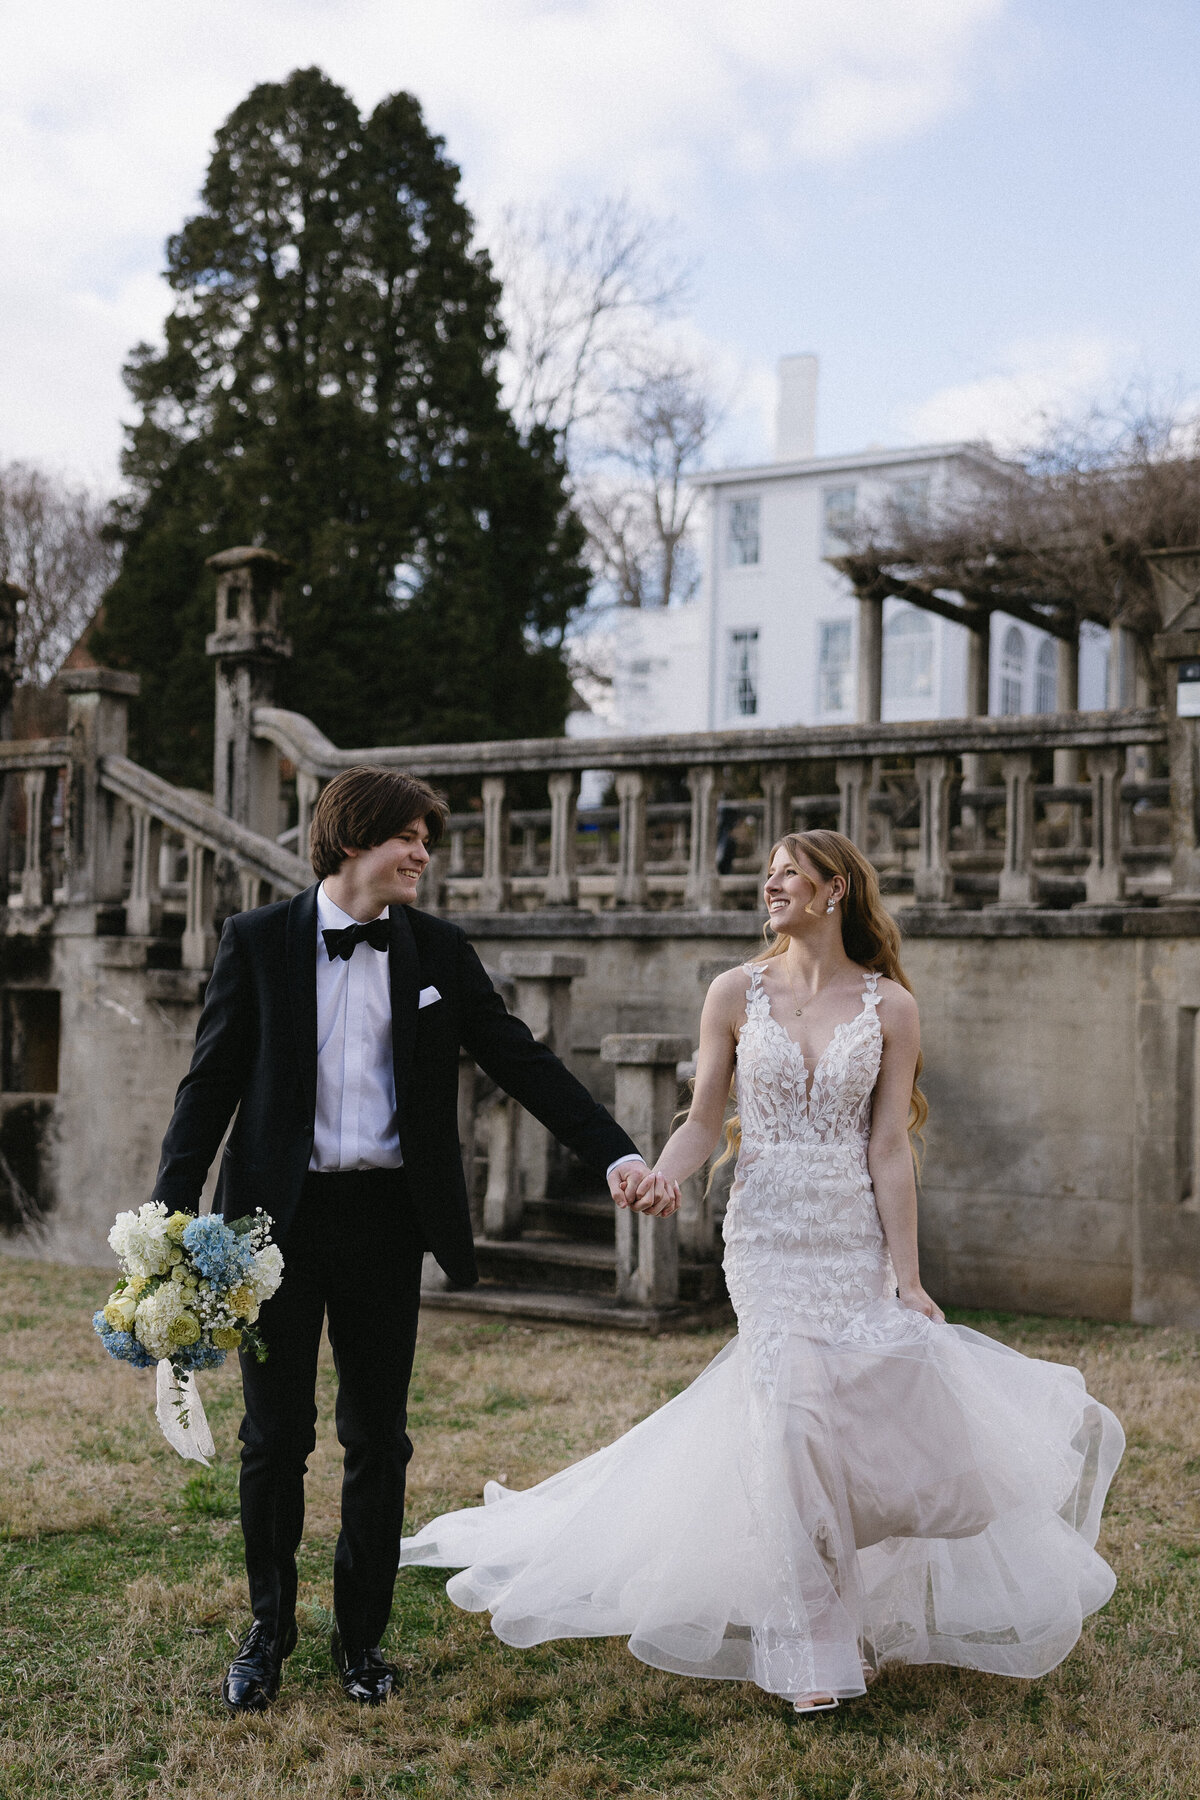 Tennessee Wedding Photographer and Video | Dana Photo Co.